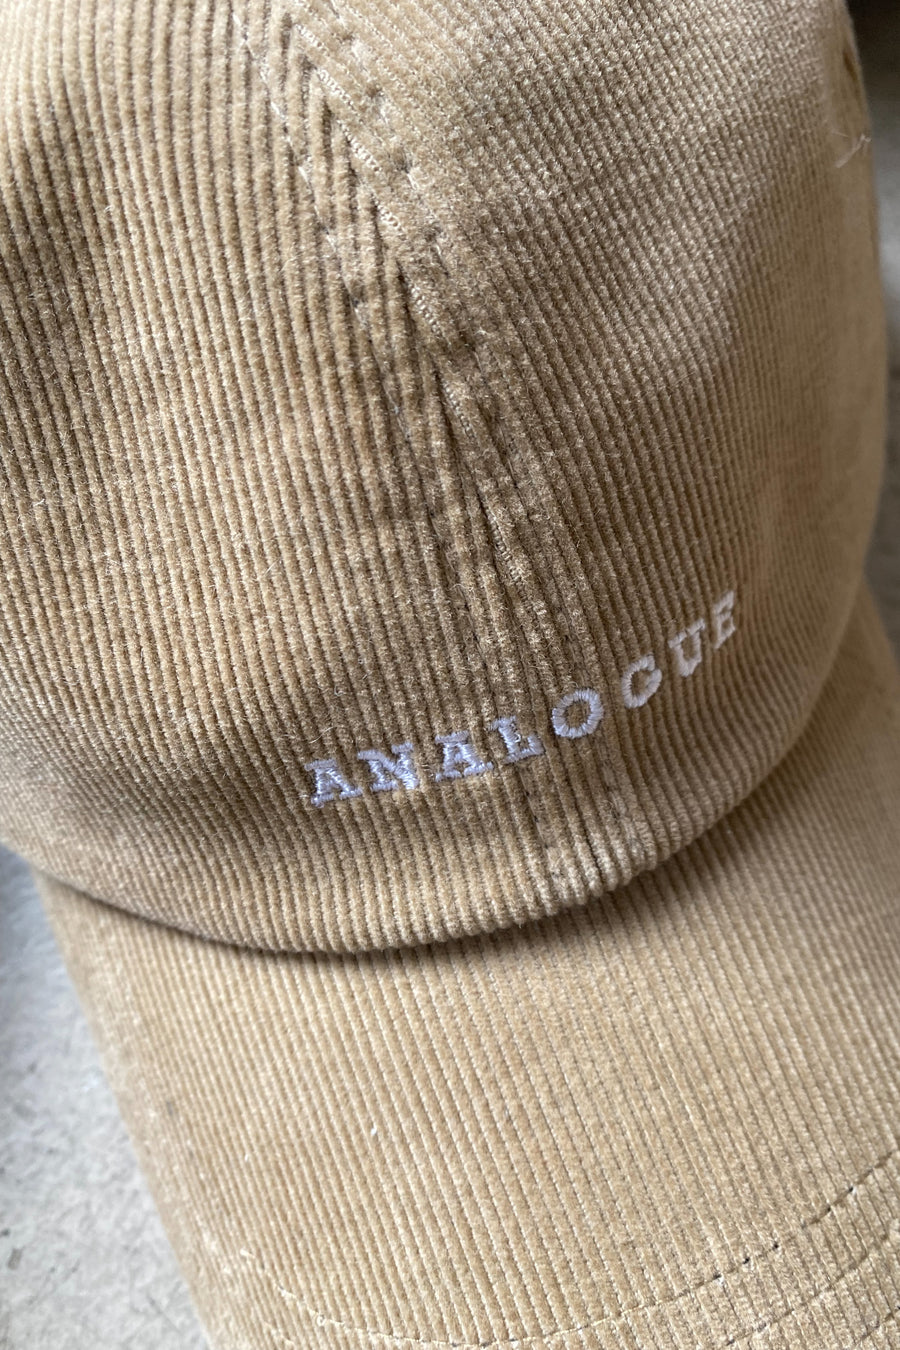 analogue cap (black,beige)